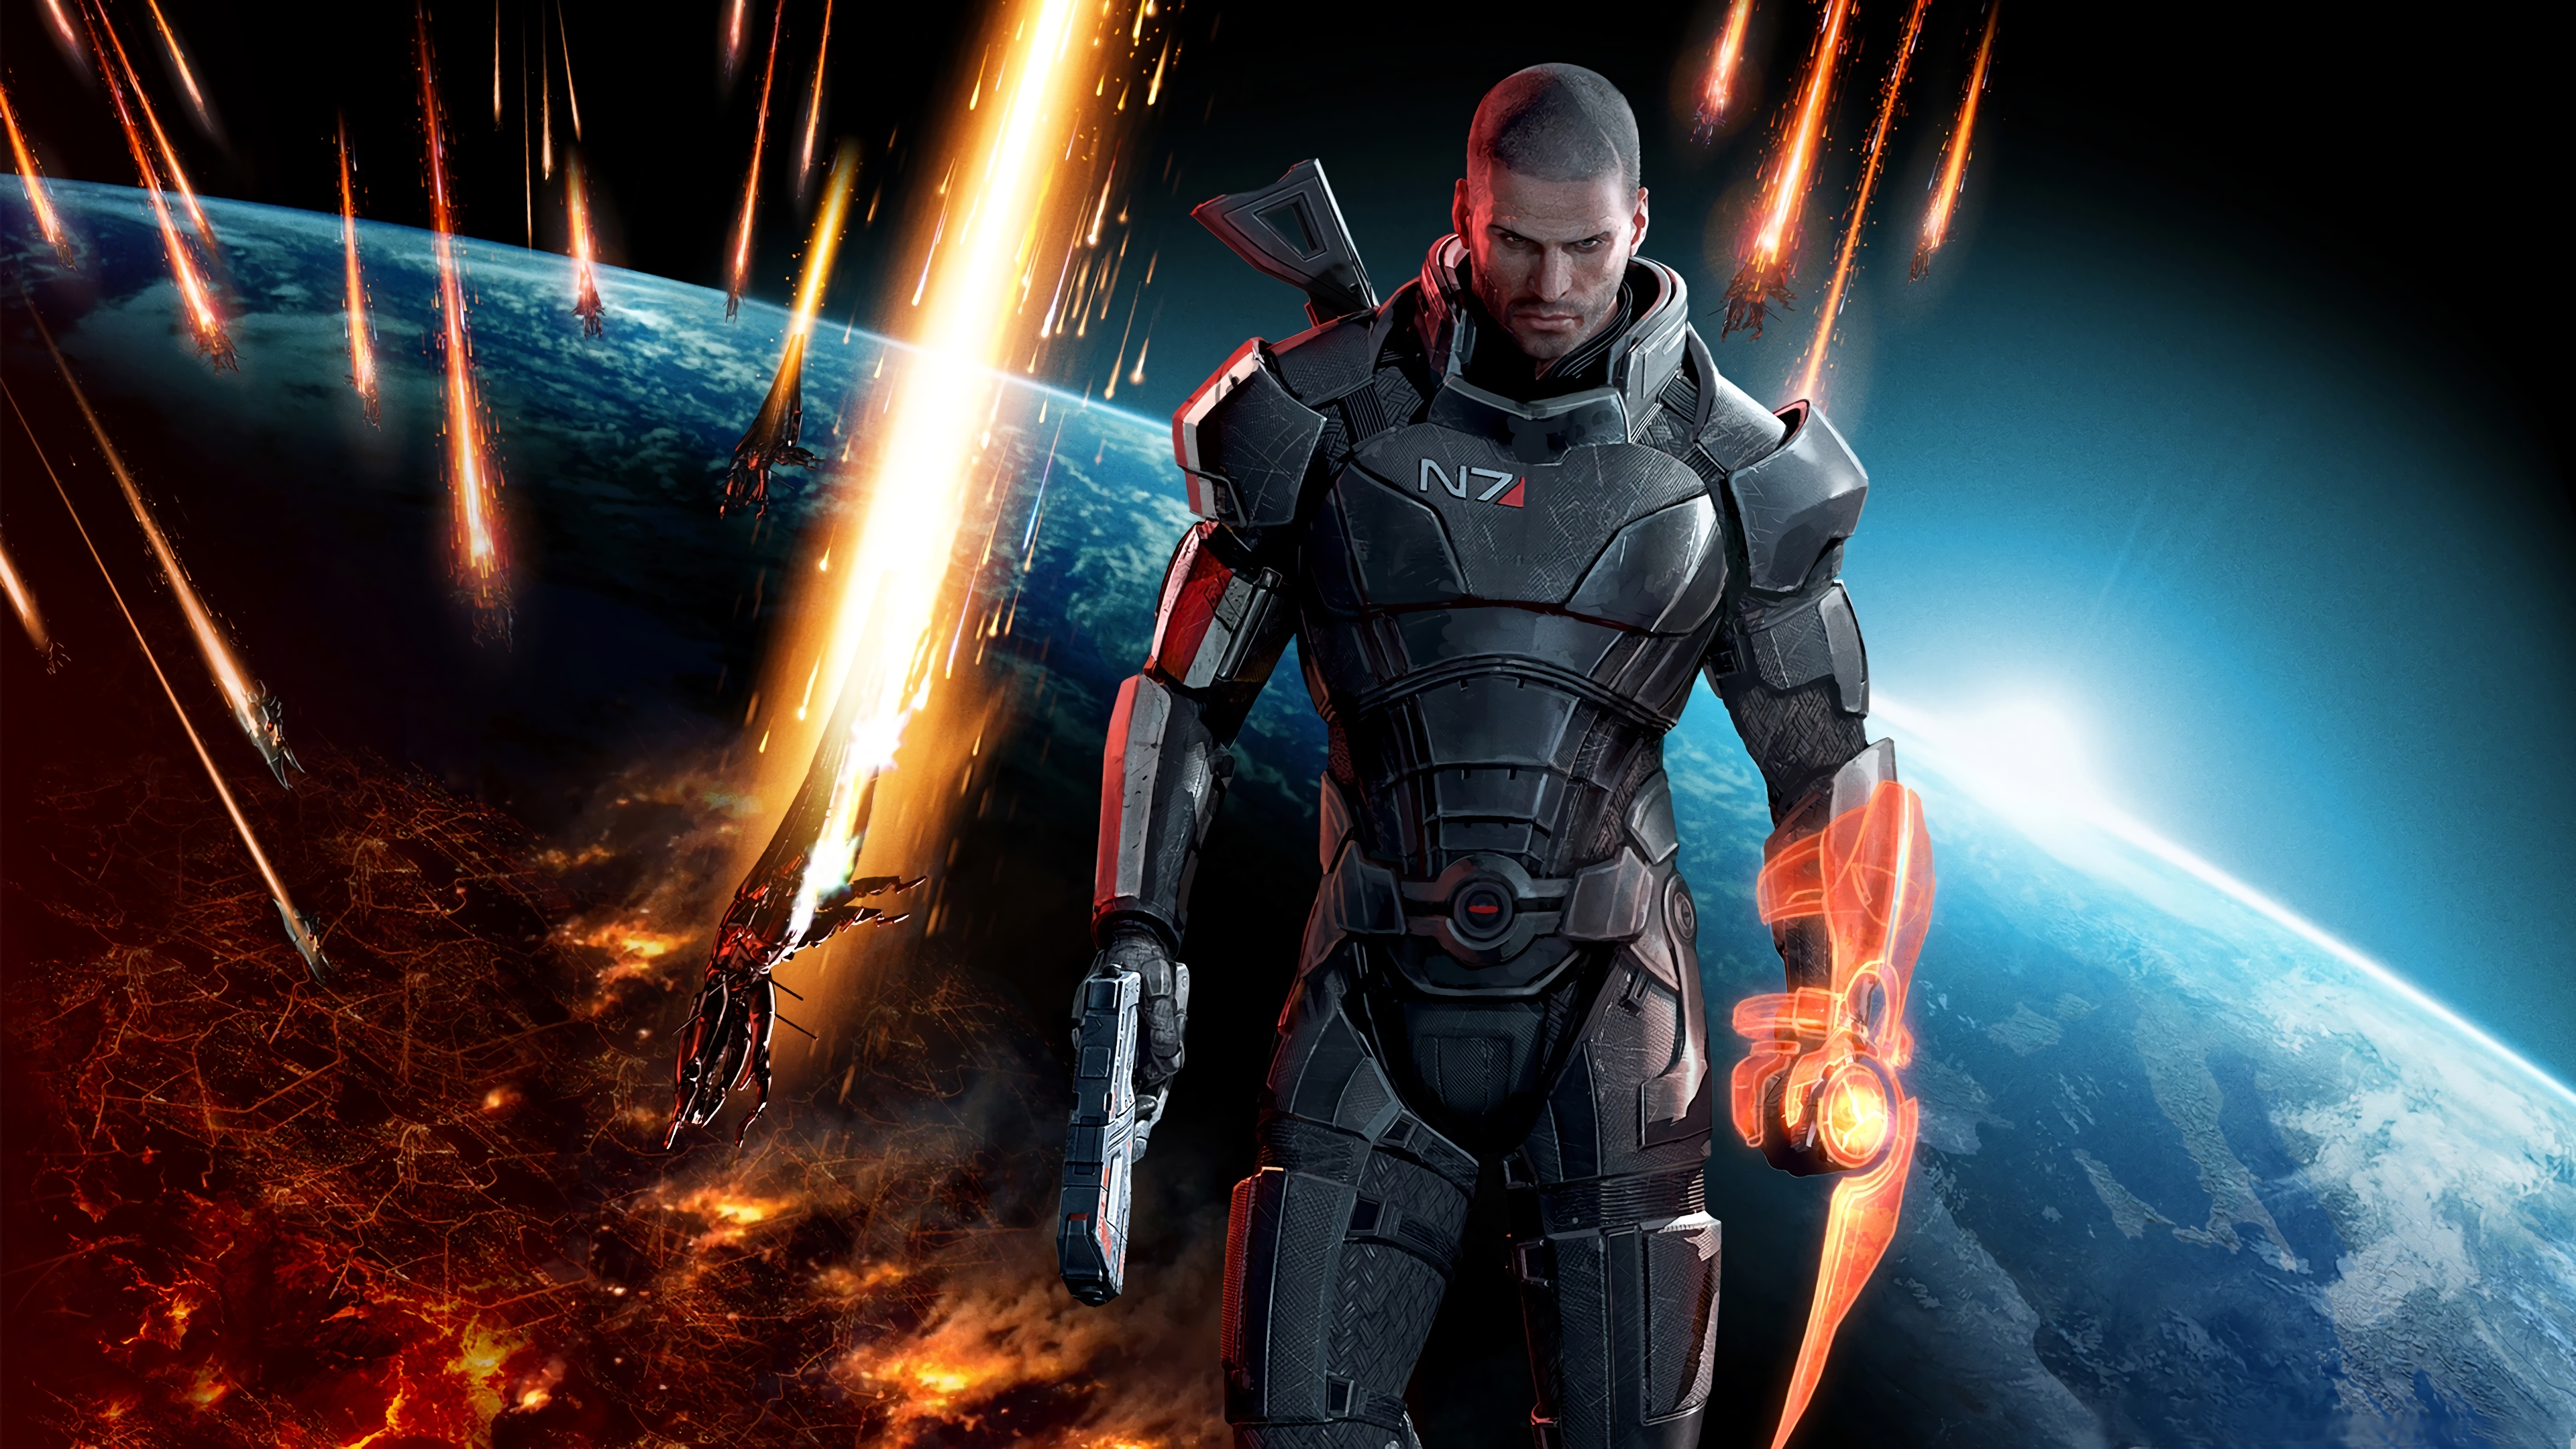 General 3840x2160 Mass Effect Mass Effect 3 Commander Shepard video games video game art video game men science fiction Science Fiction Men futuristic armor armor gun Earth